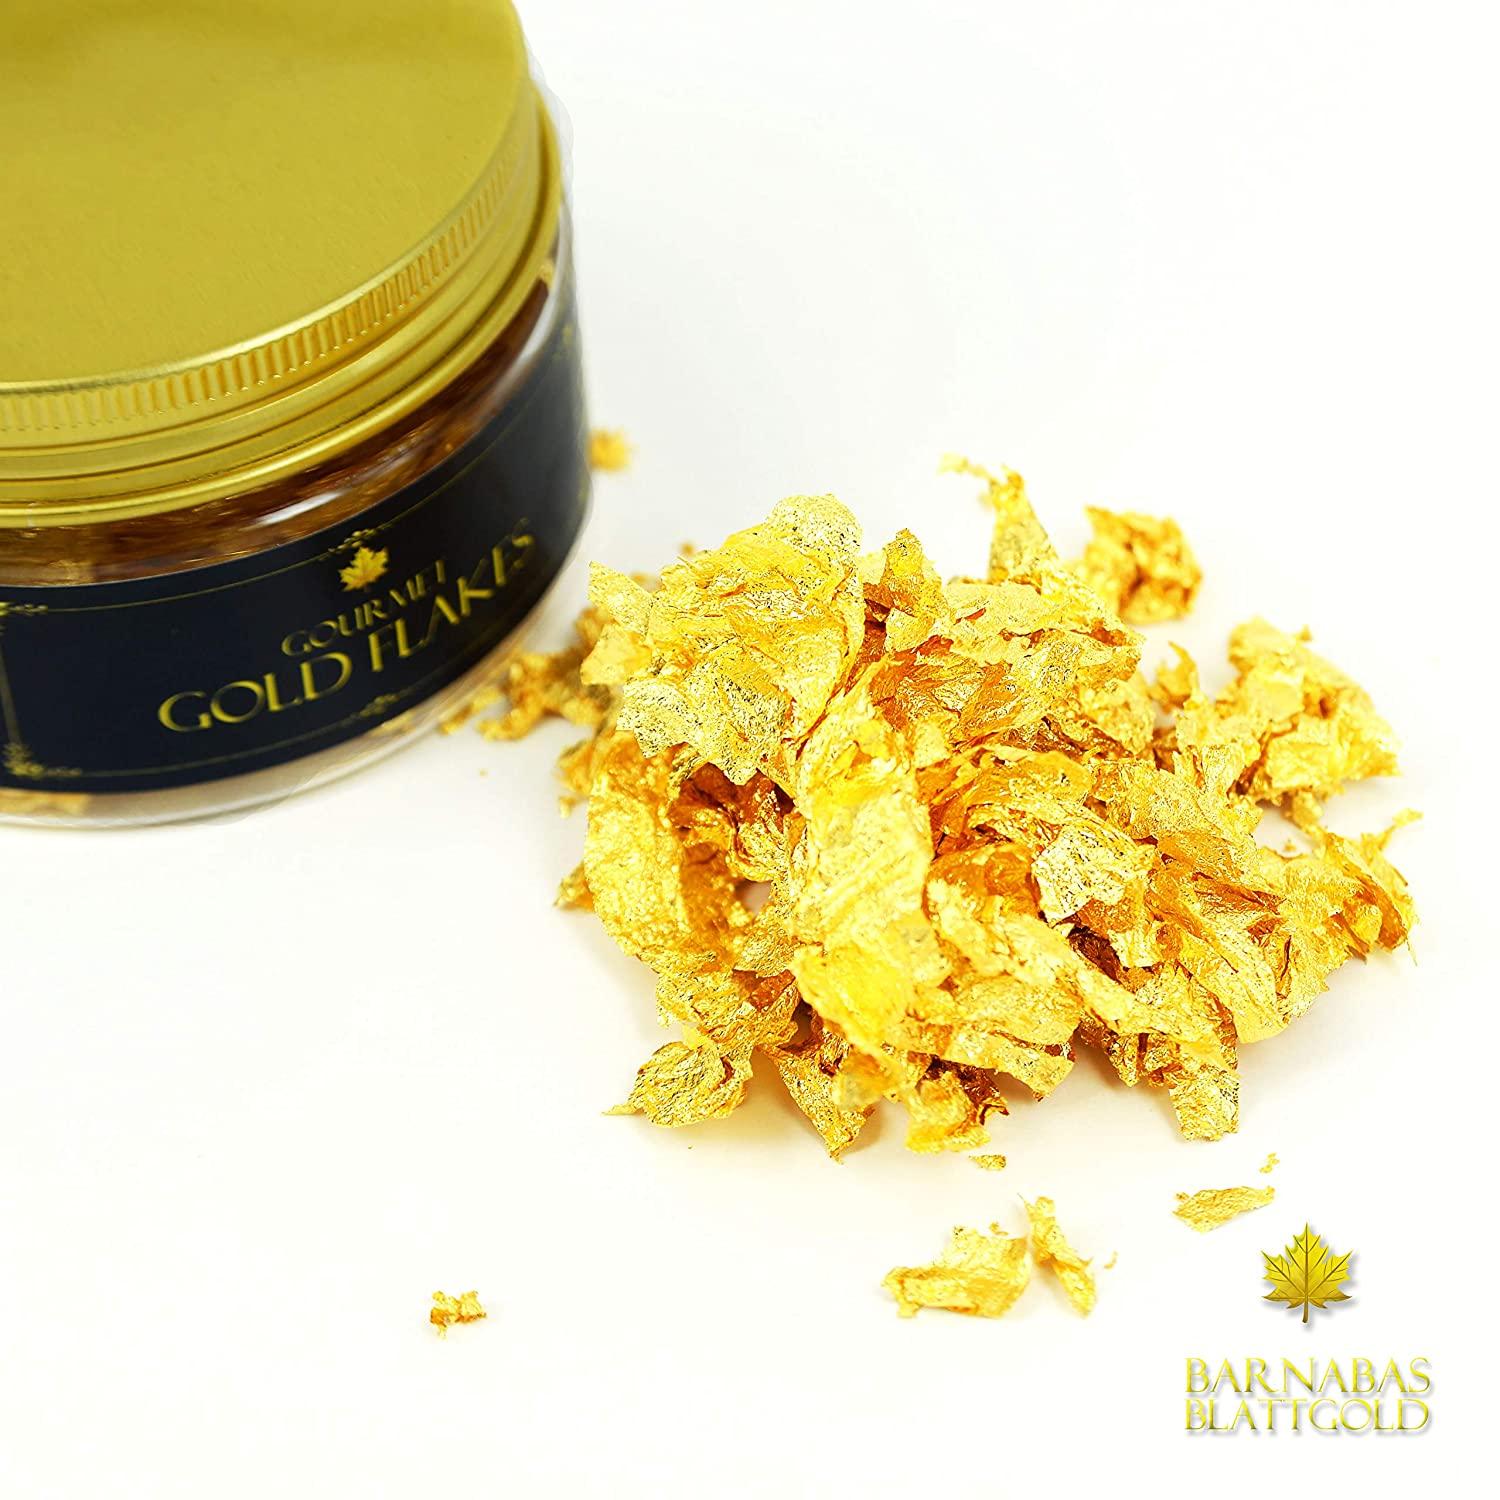 Edible Genuine Gold Leaf Flakes - by Barnabas Blattgold - 150mg Jar Flakes  - 150mg